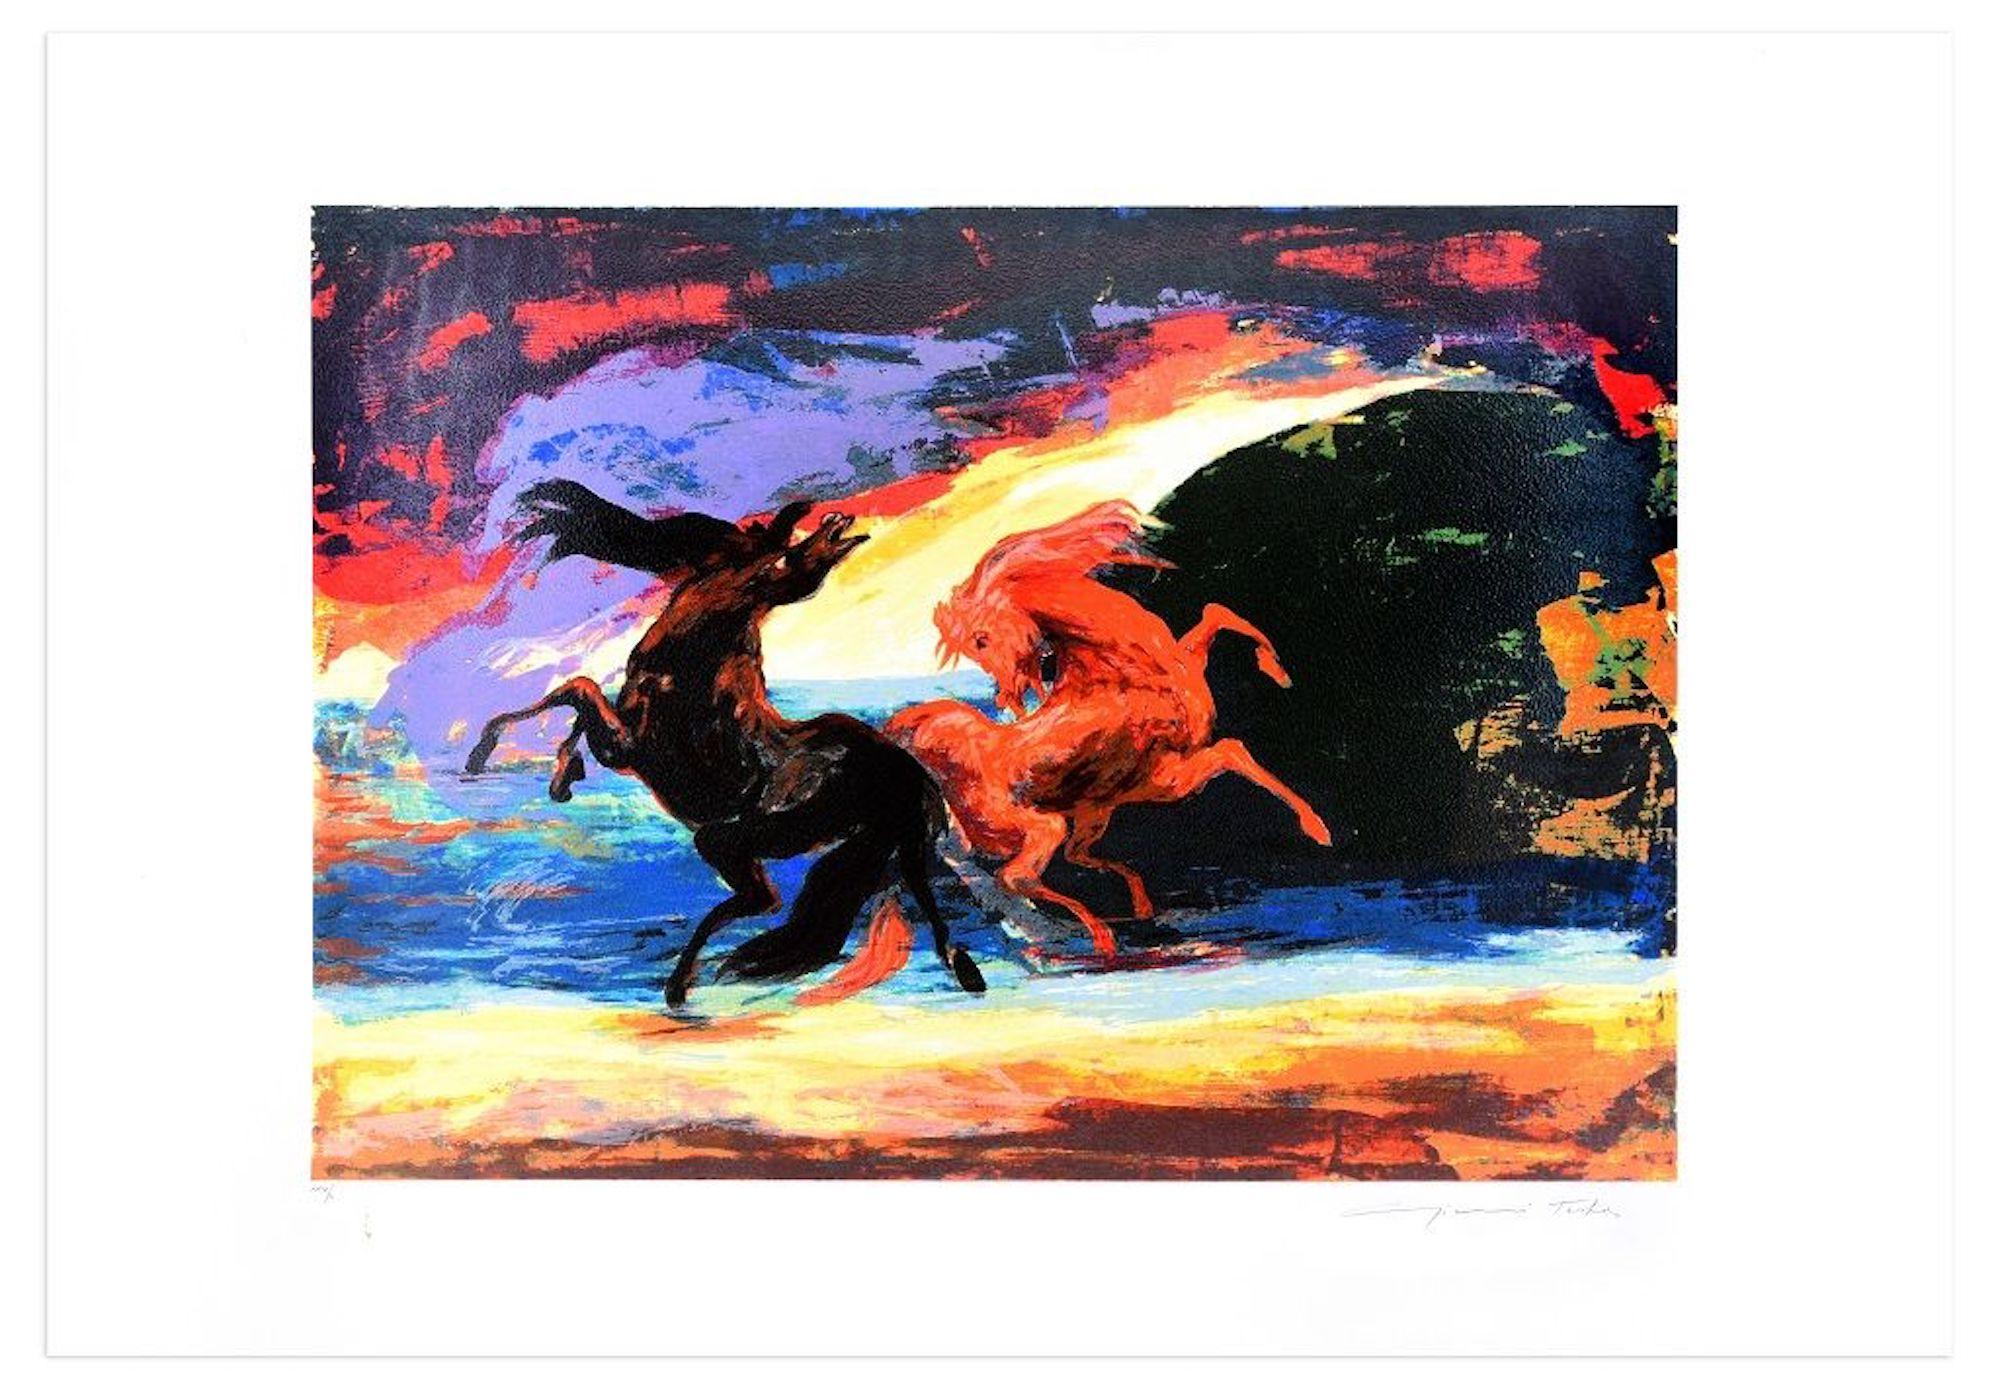 Horse Carousel - Original Screen Print by Gianni Testa - 1986